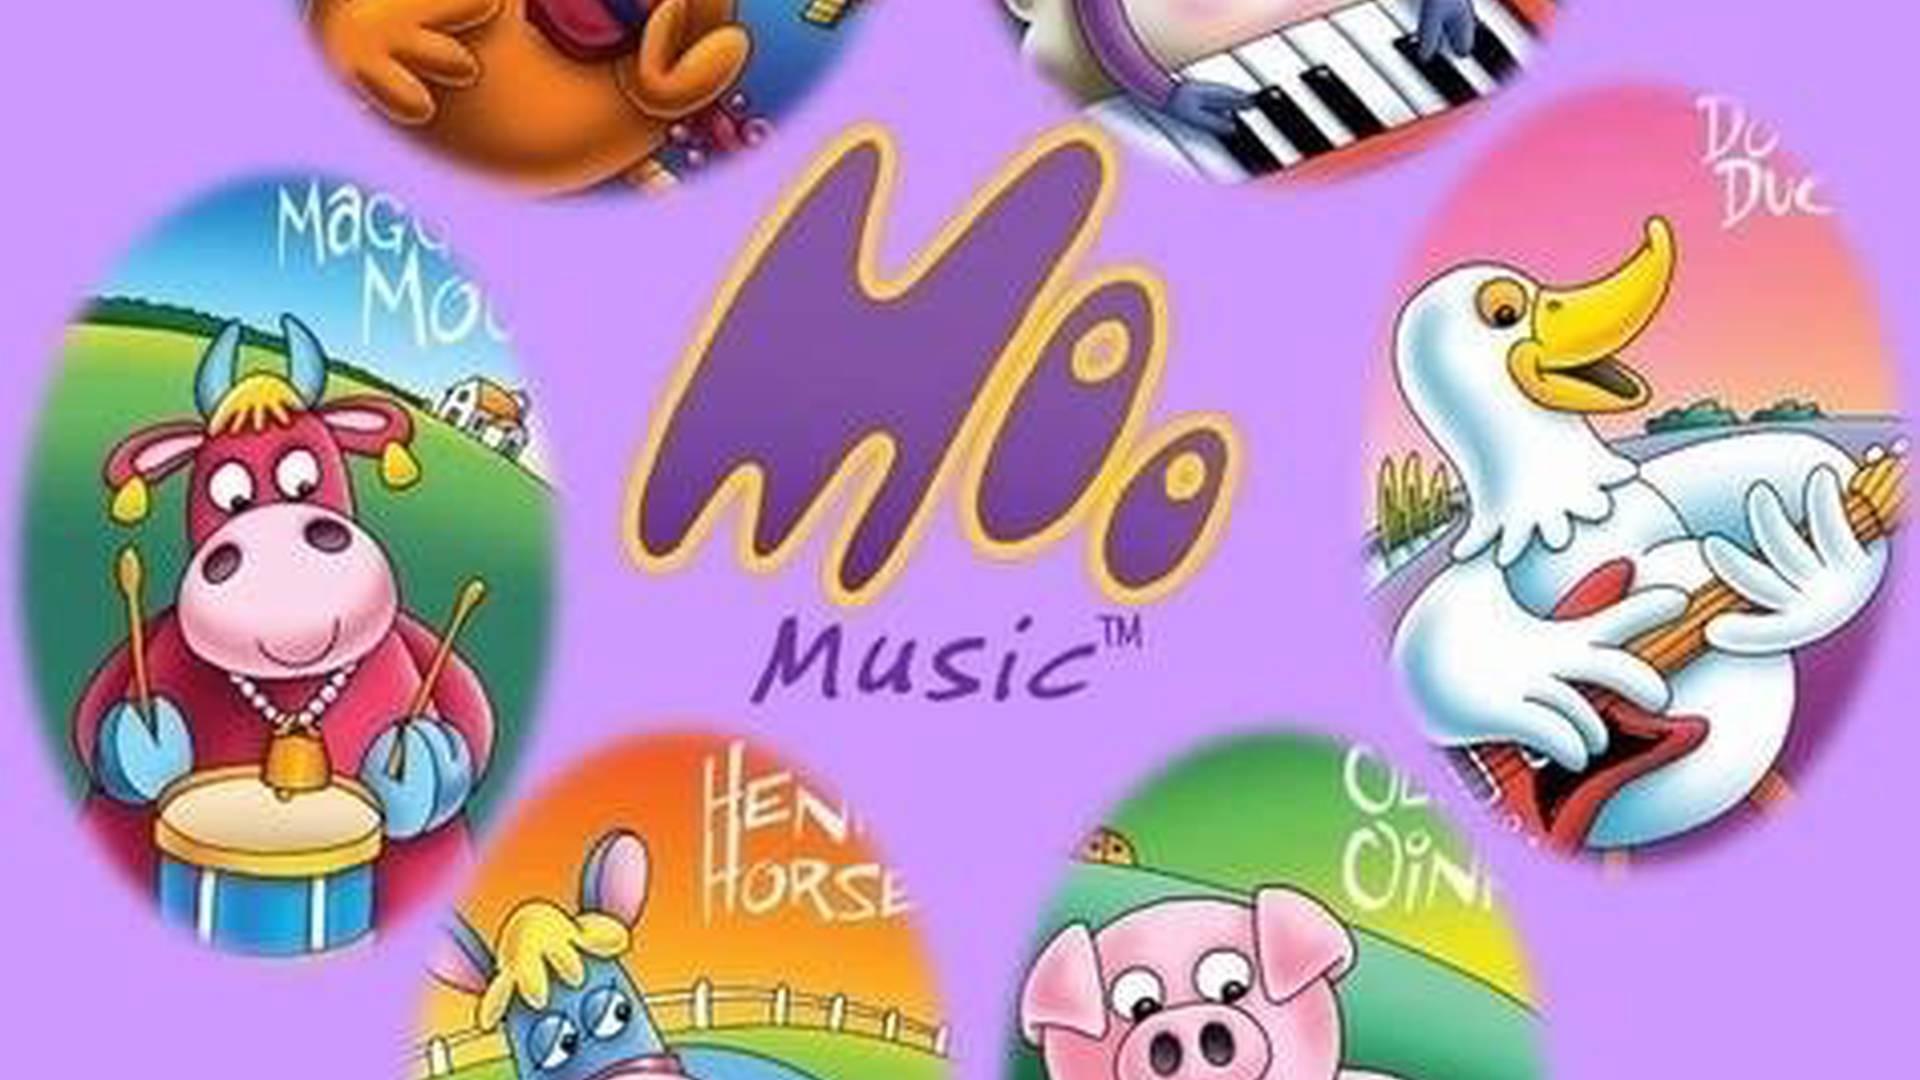 Moo Music photo